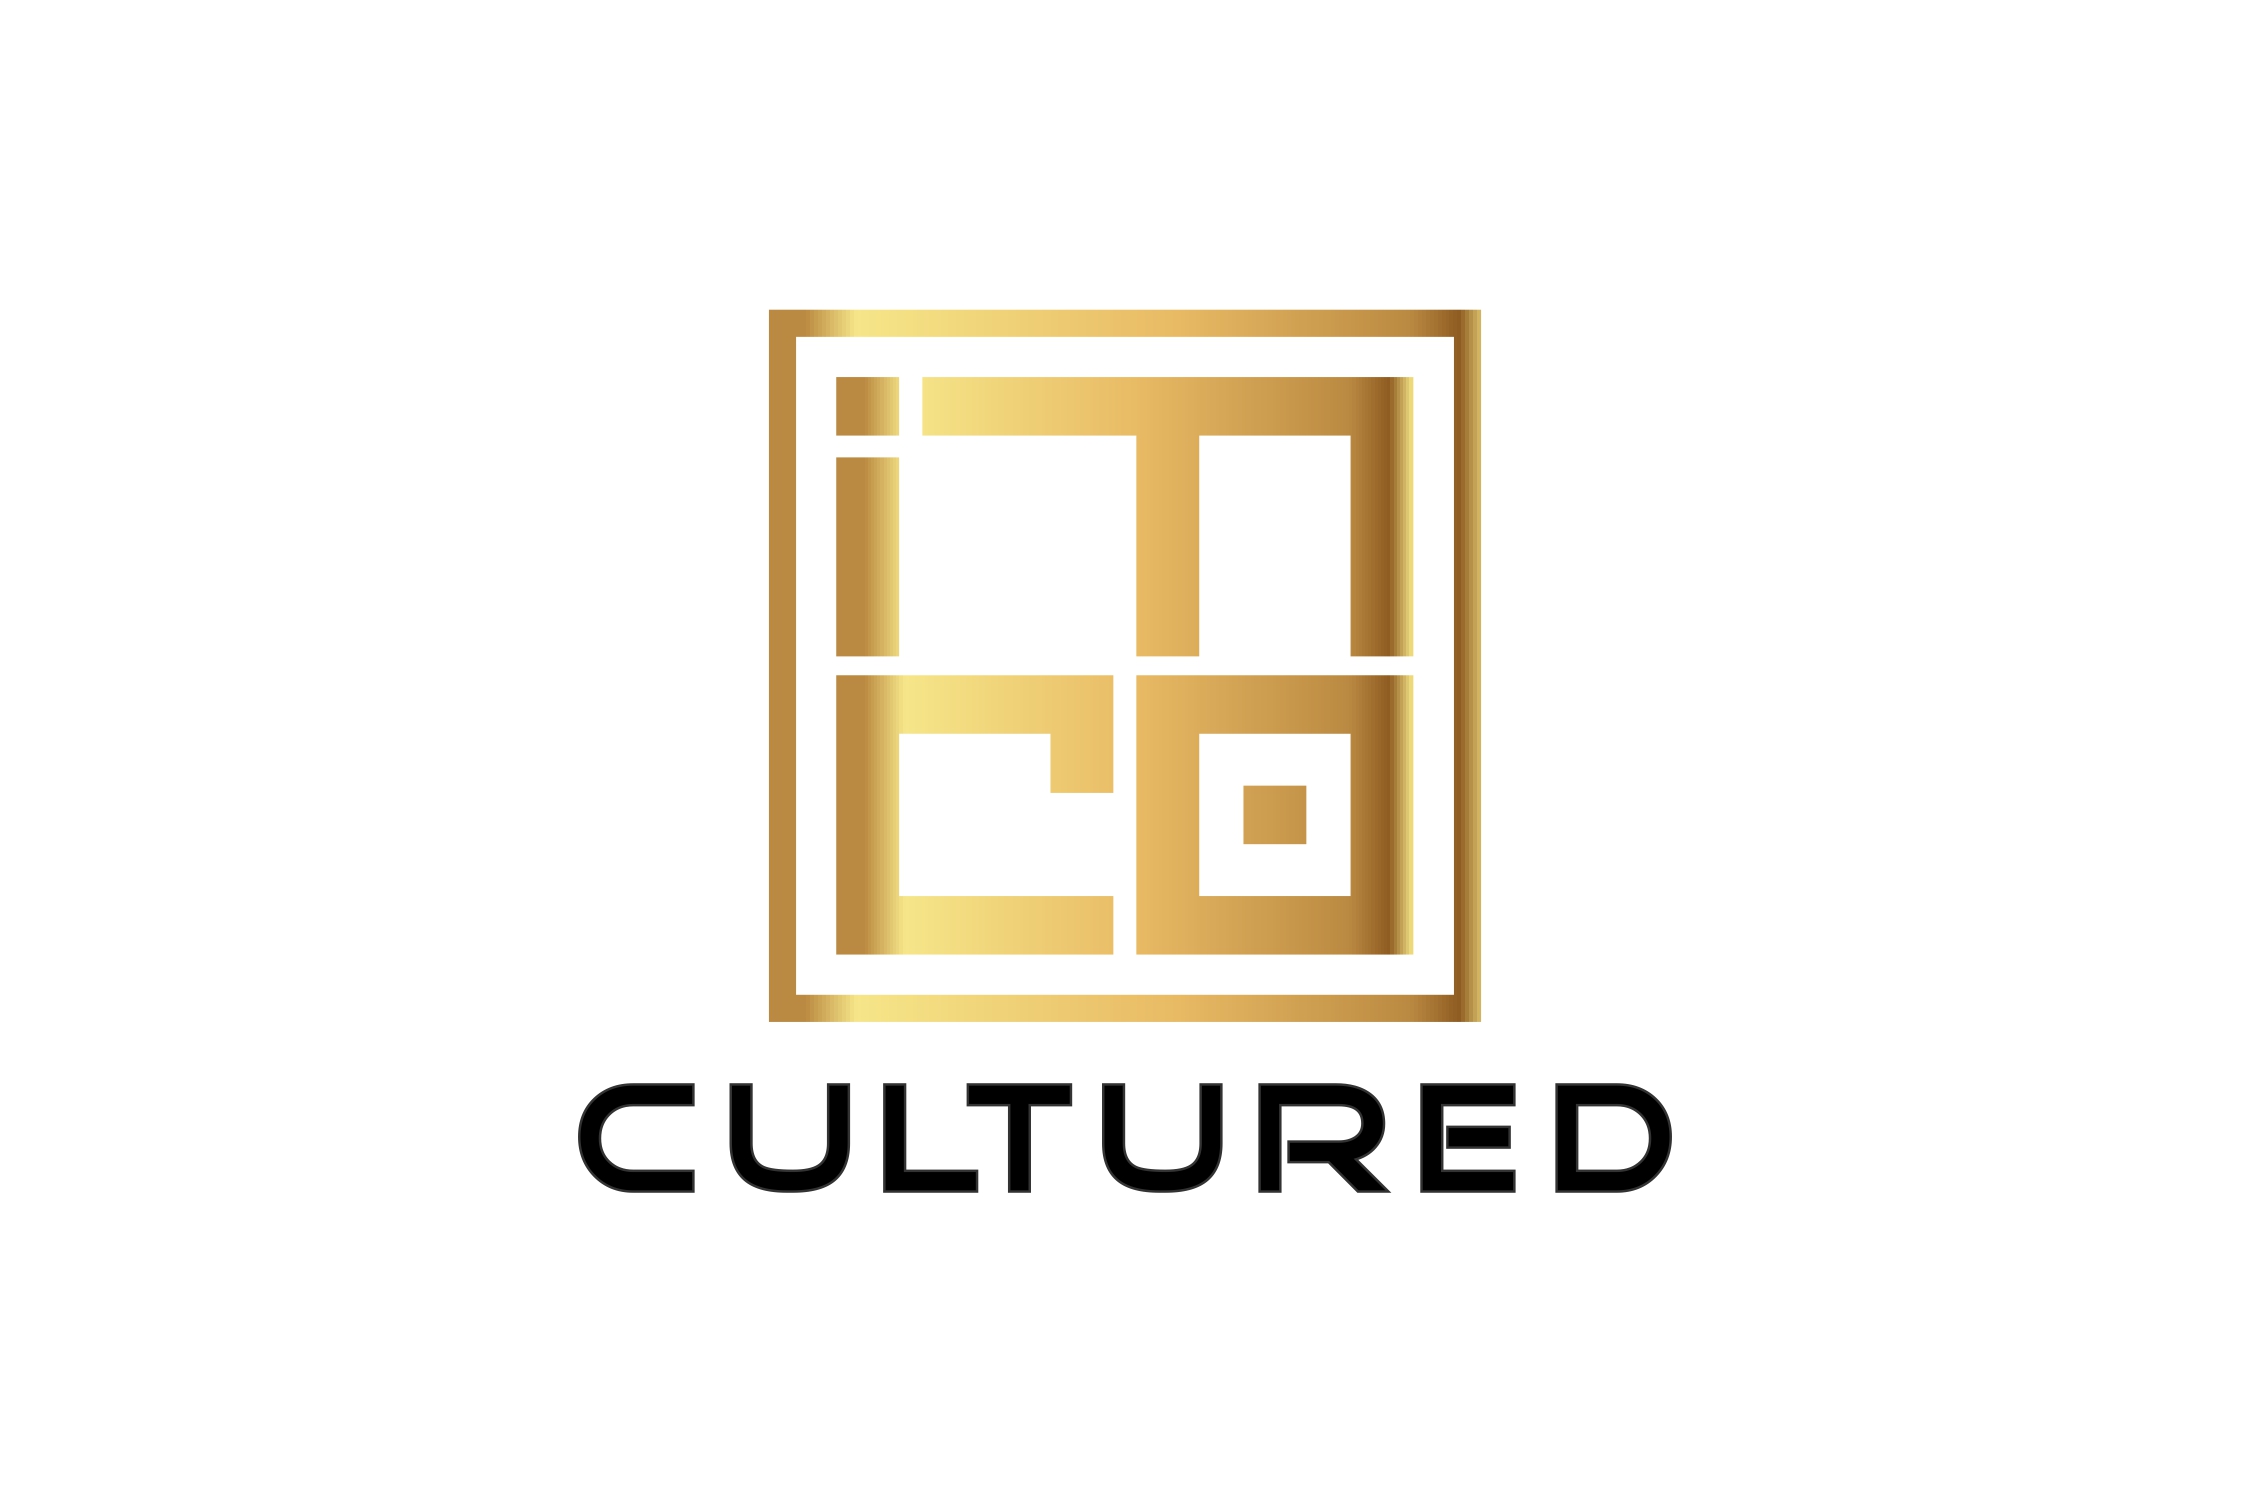 In Cultured Company logo